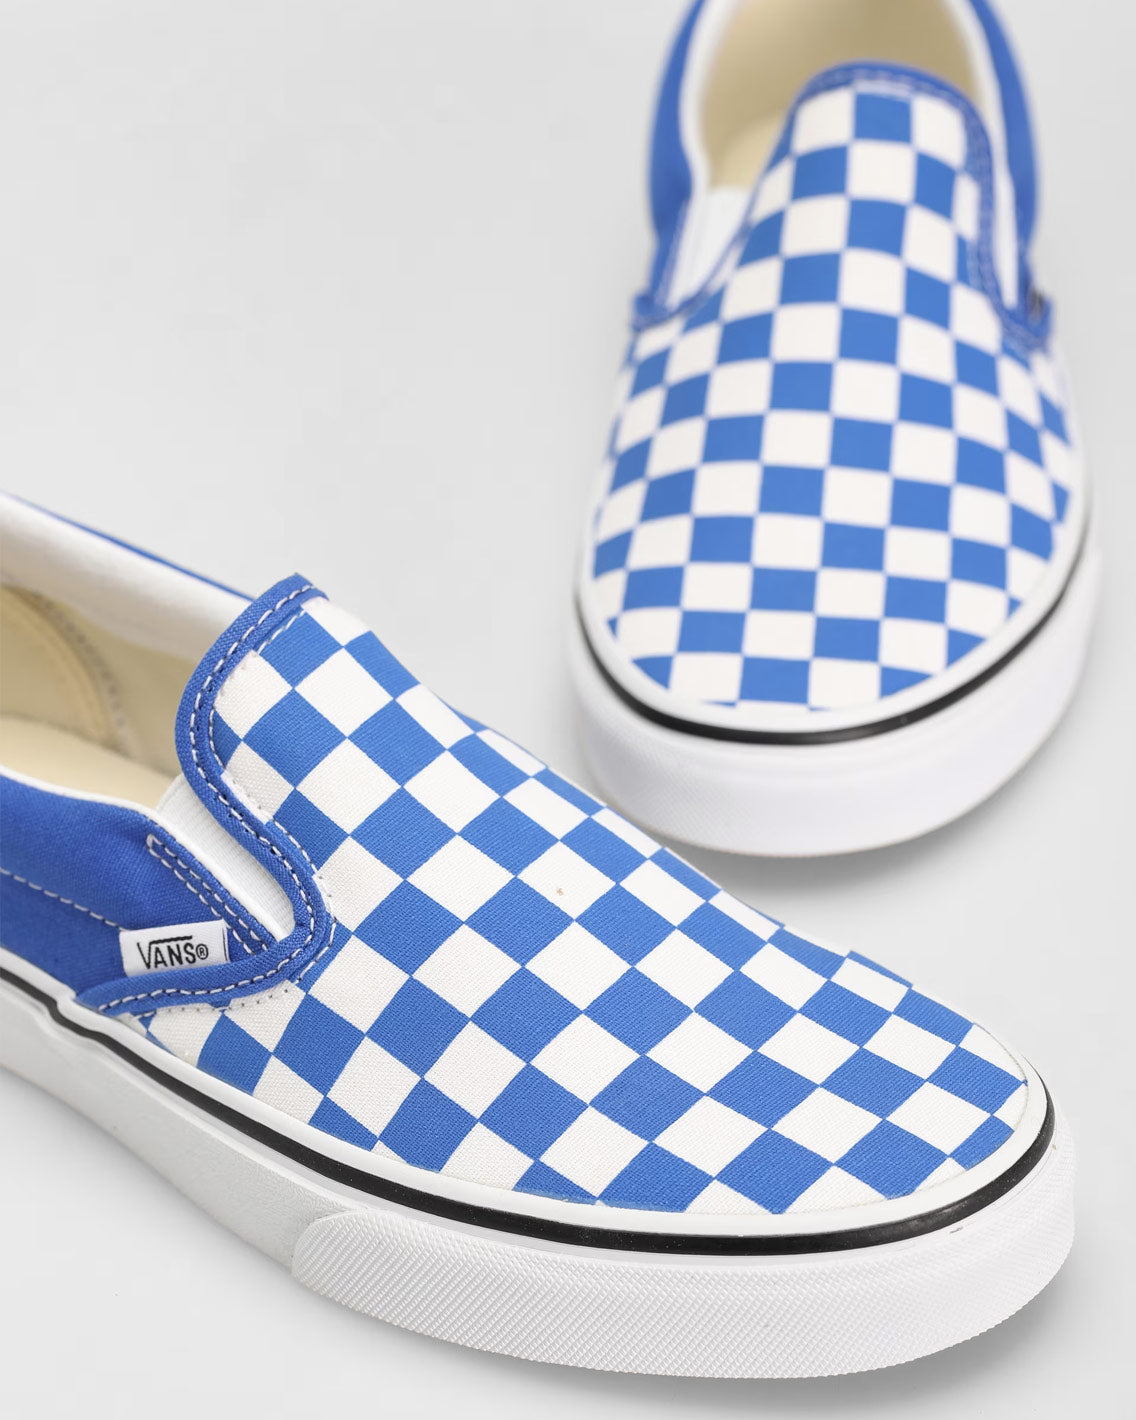 Vans - Classic Slip On Checkerboard - Dazzling Blue